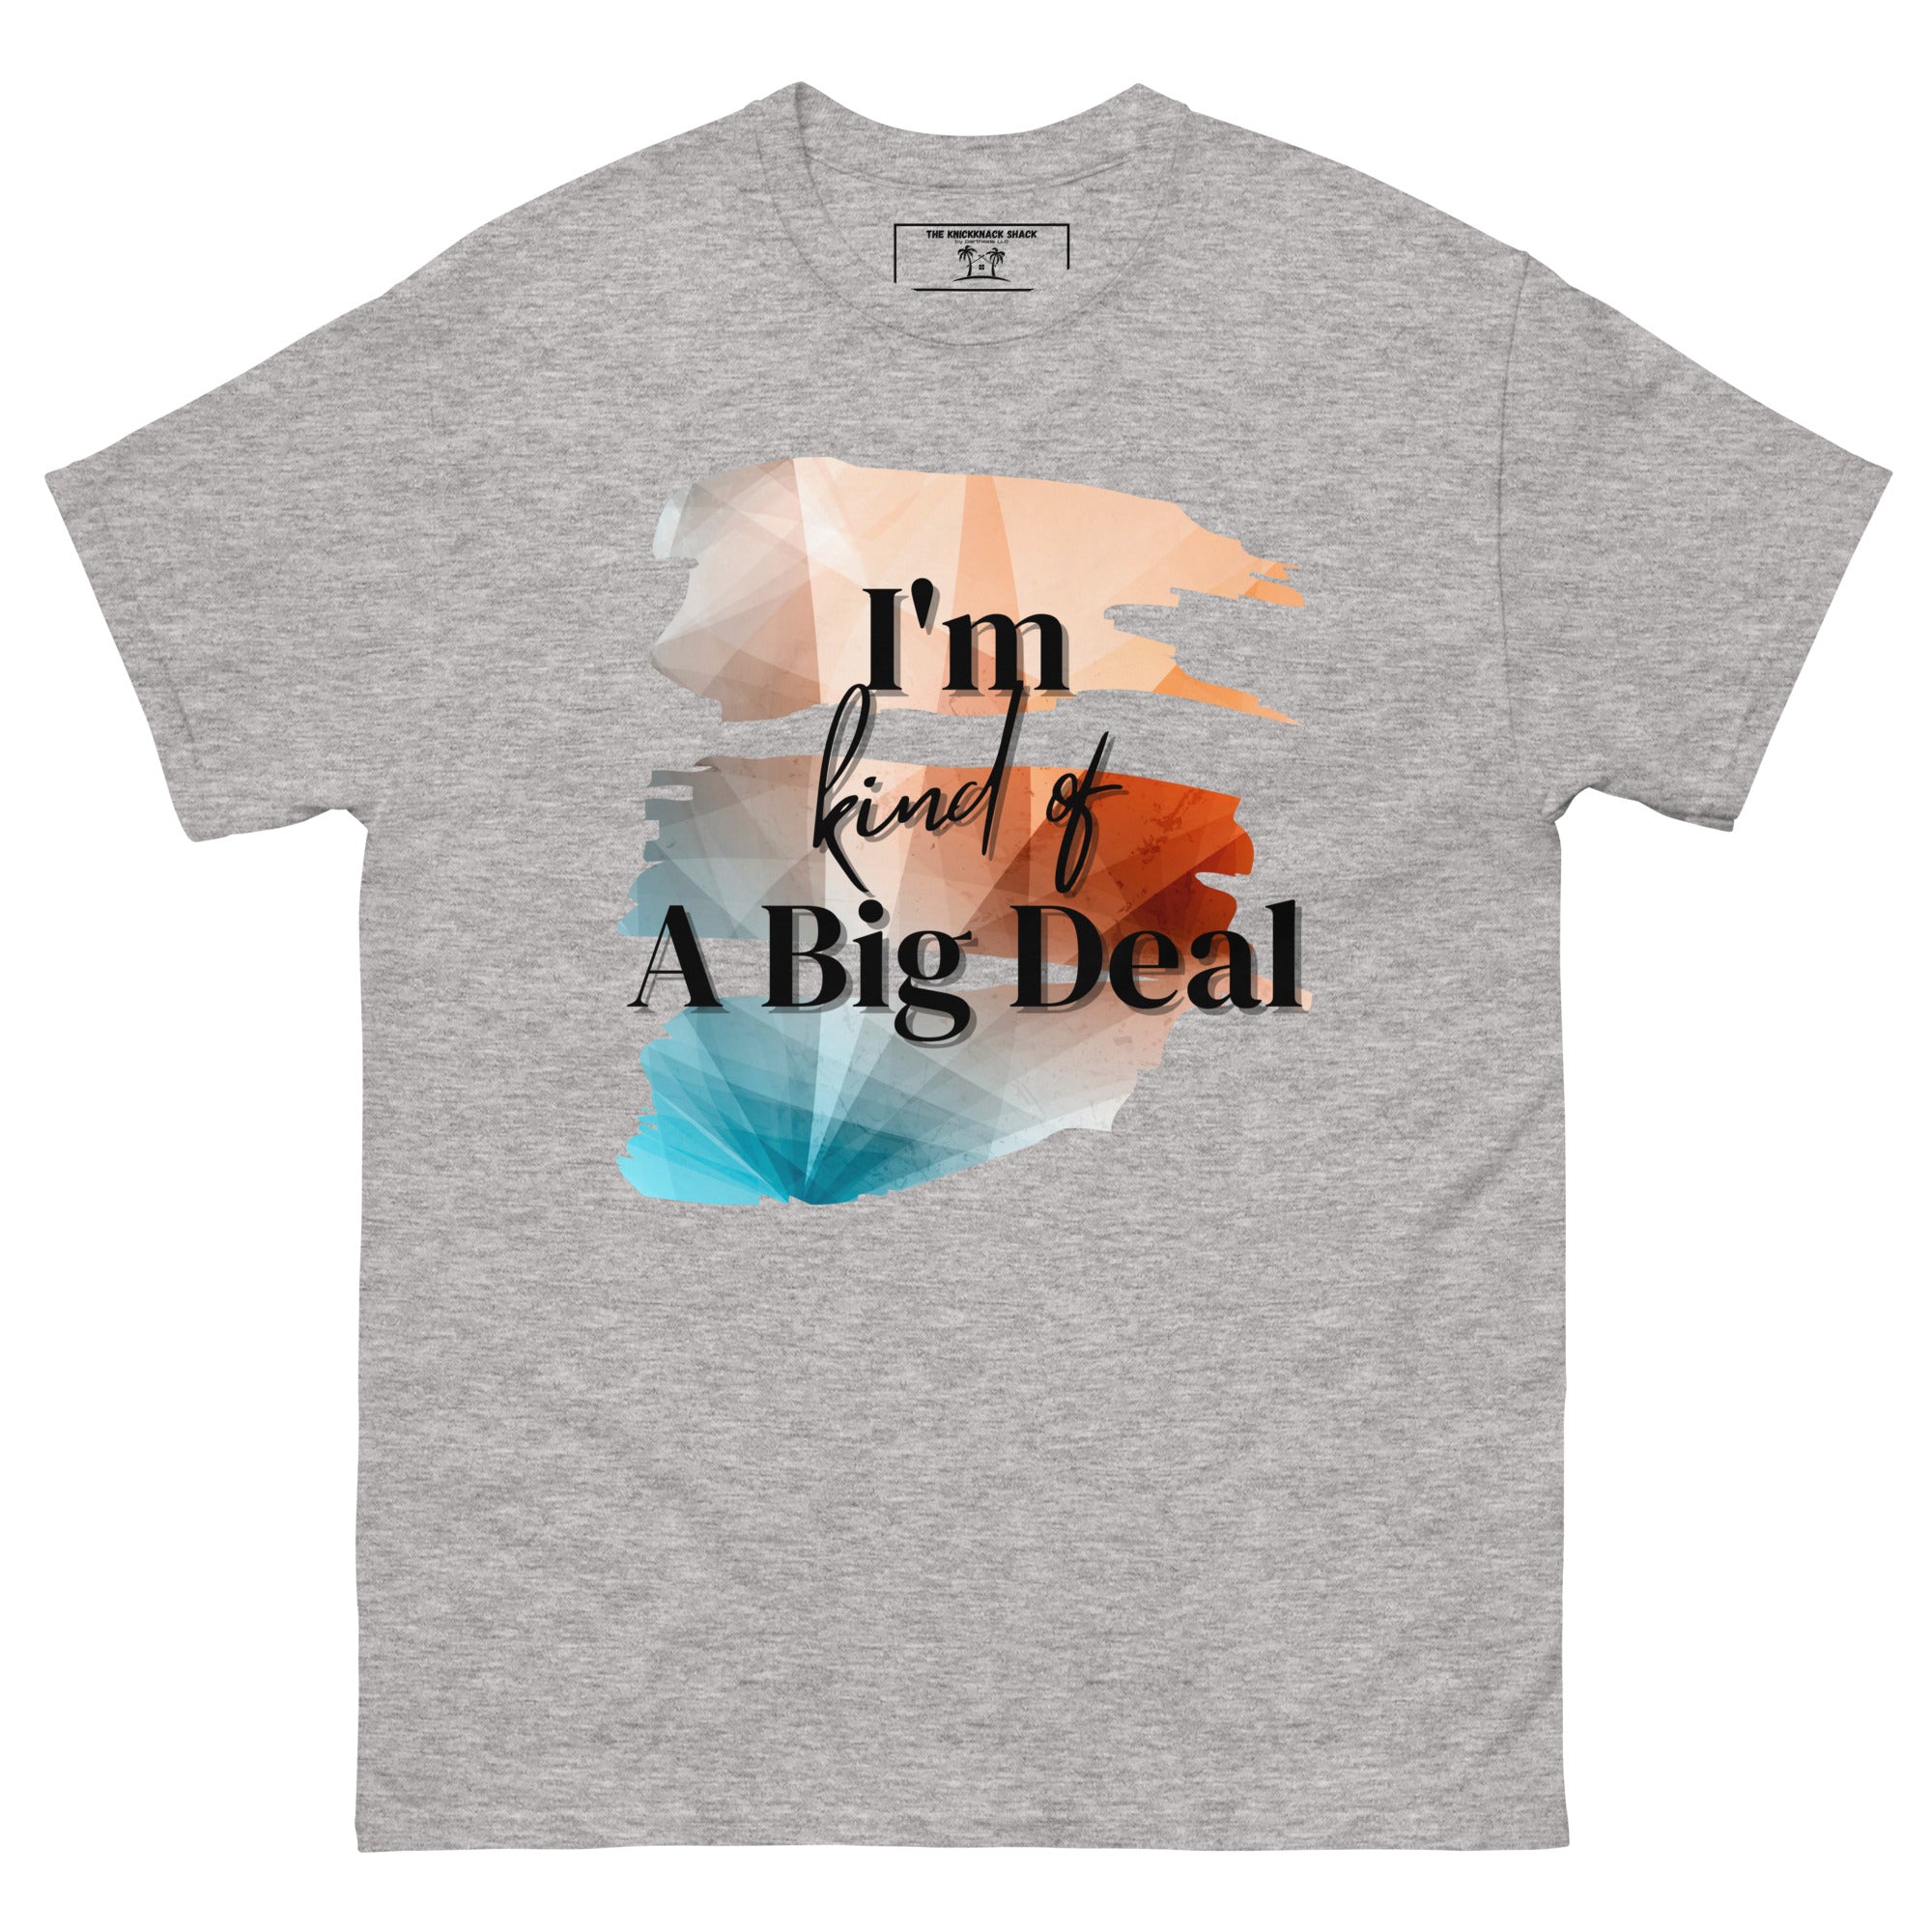 Camiseta clásica - Big Deal (colores claros)